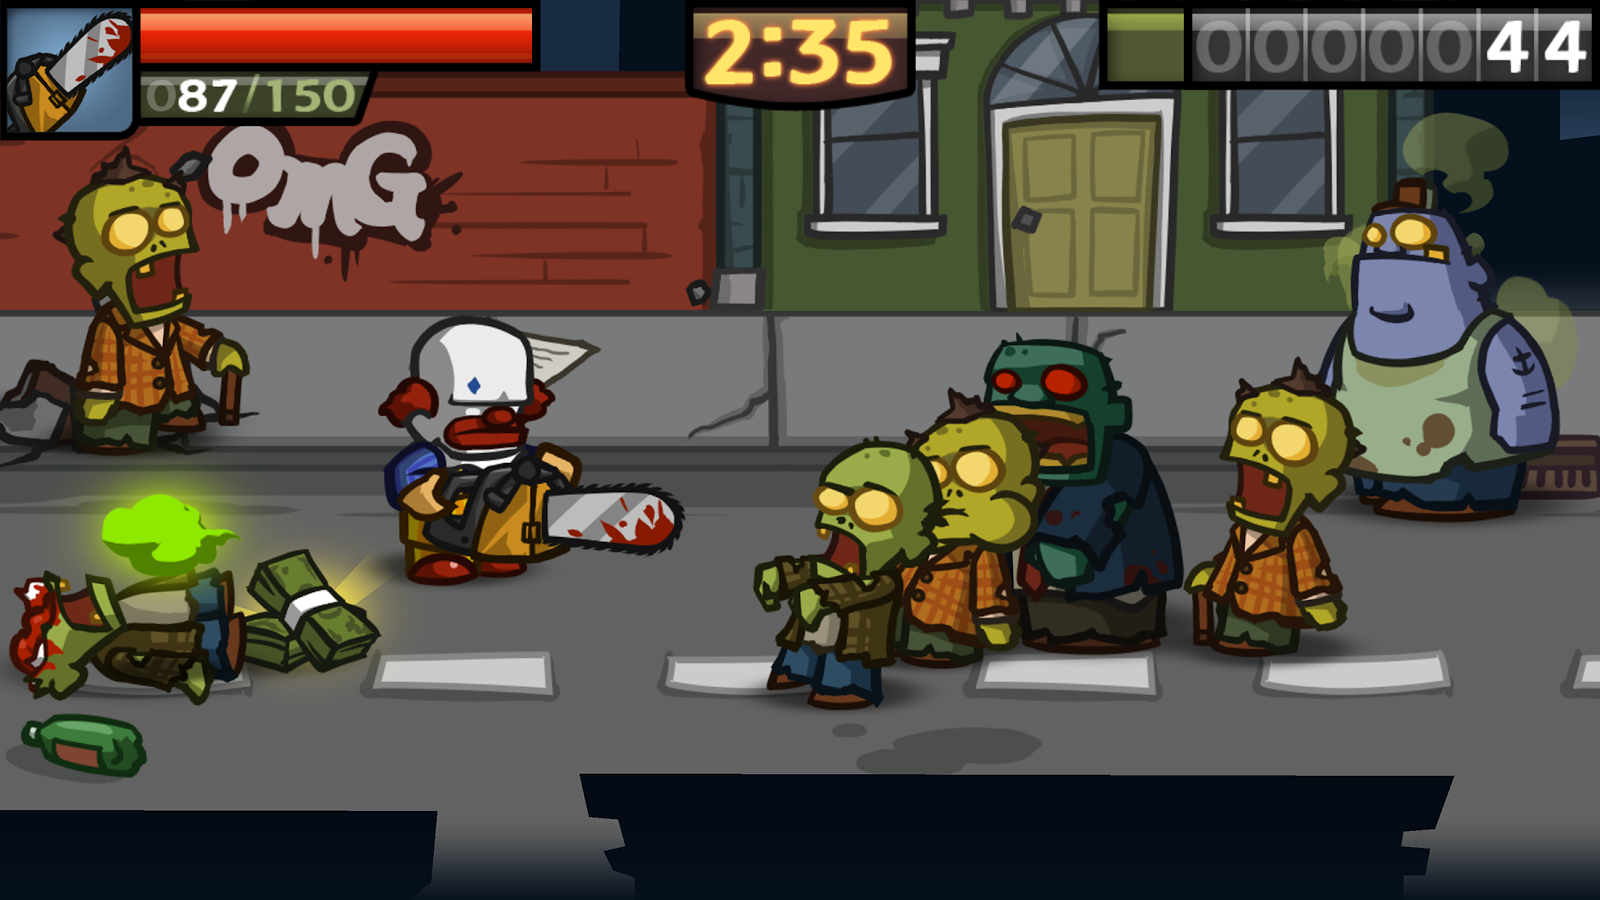    Zombieville USA 2- screenshot  